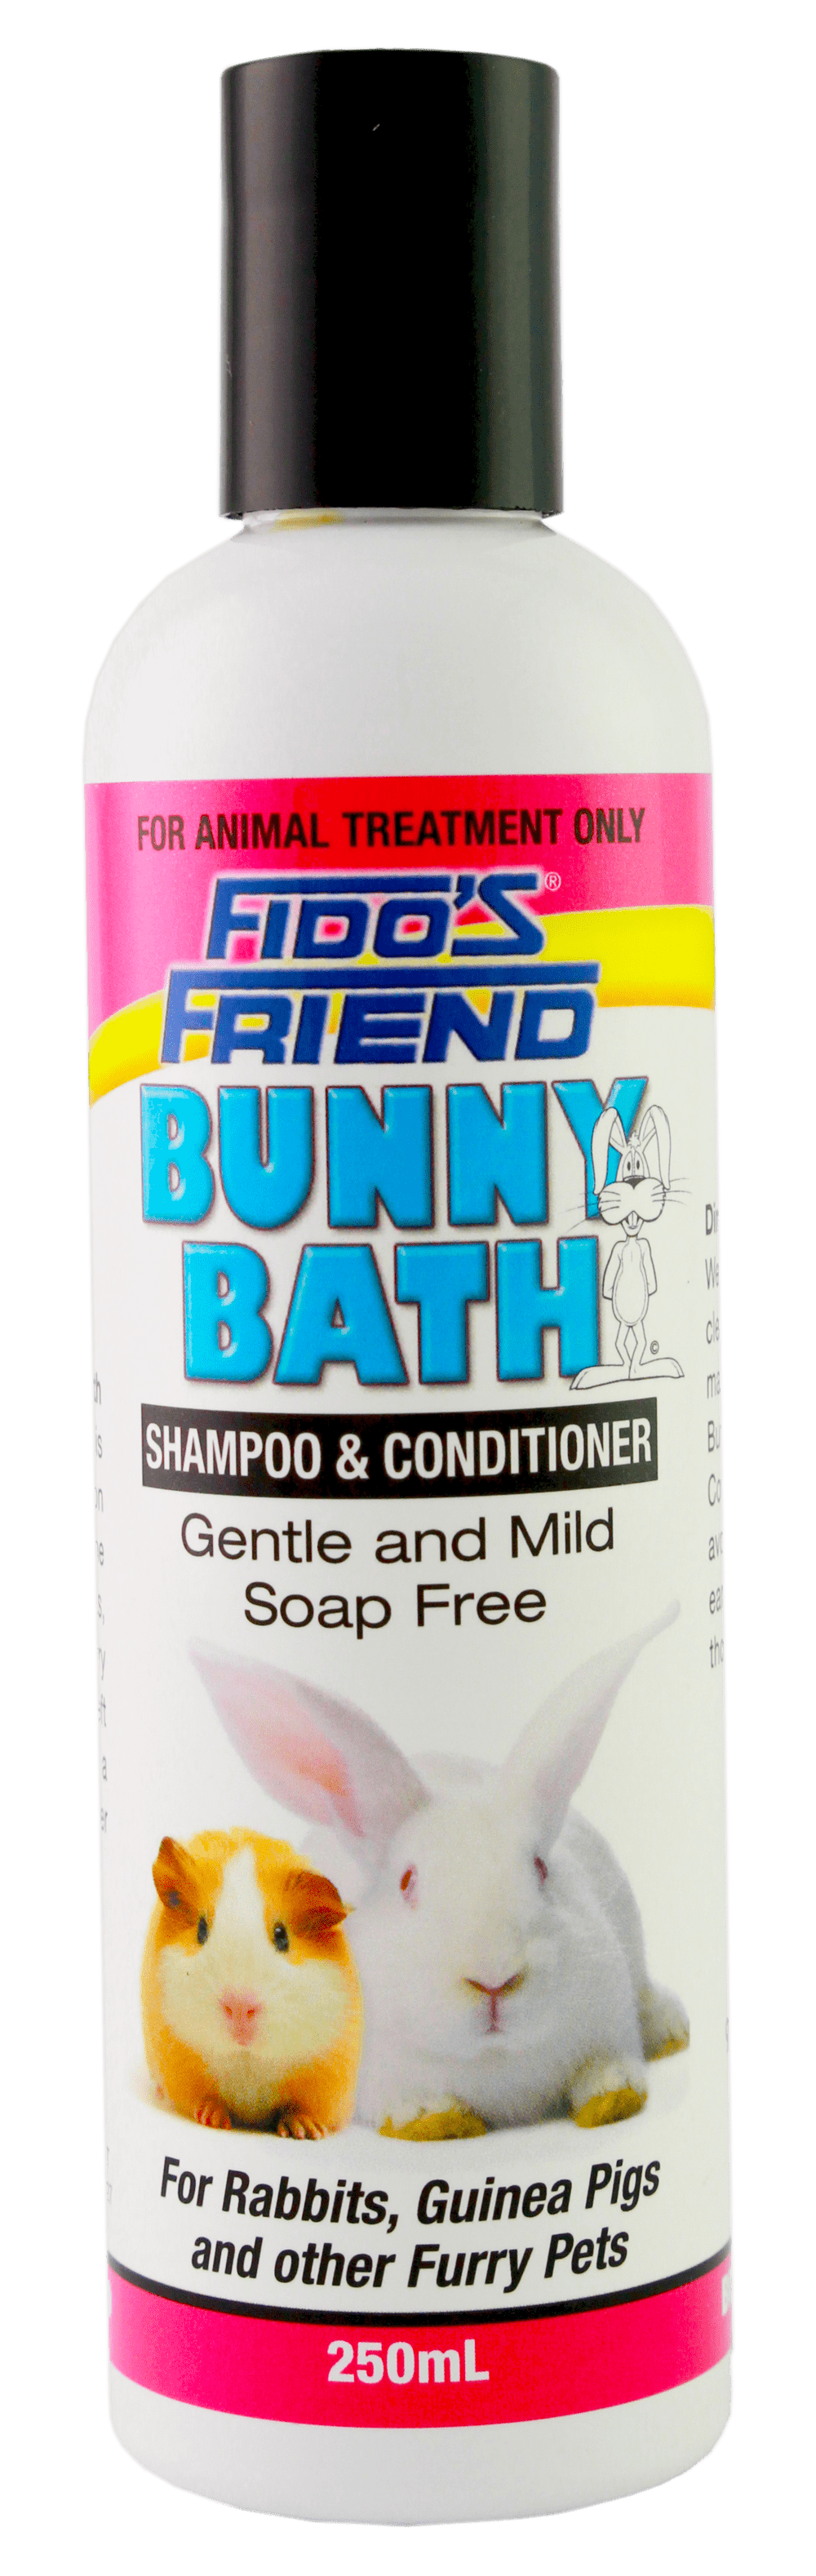 Fido's Bunny Bath Shampoo